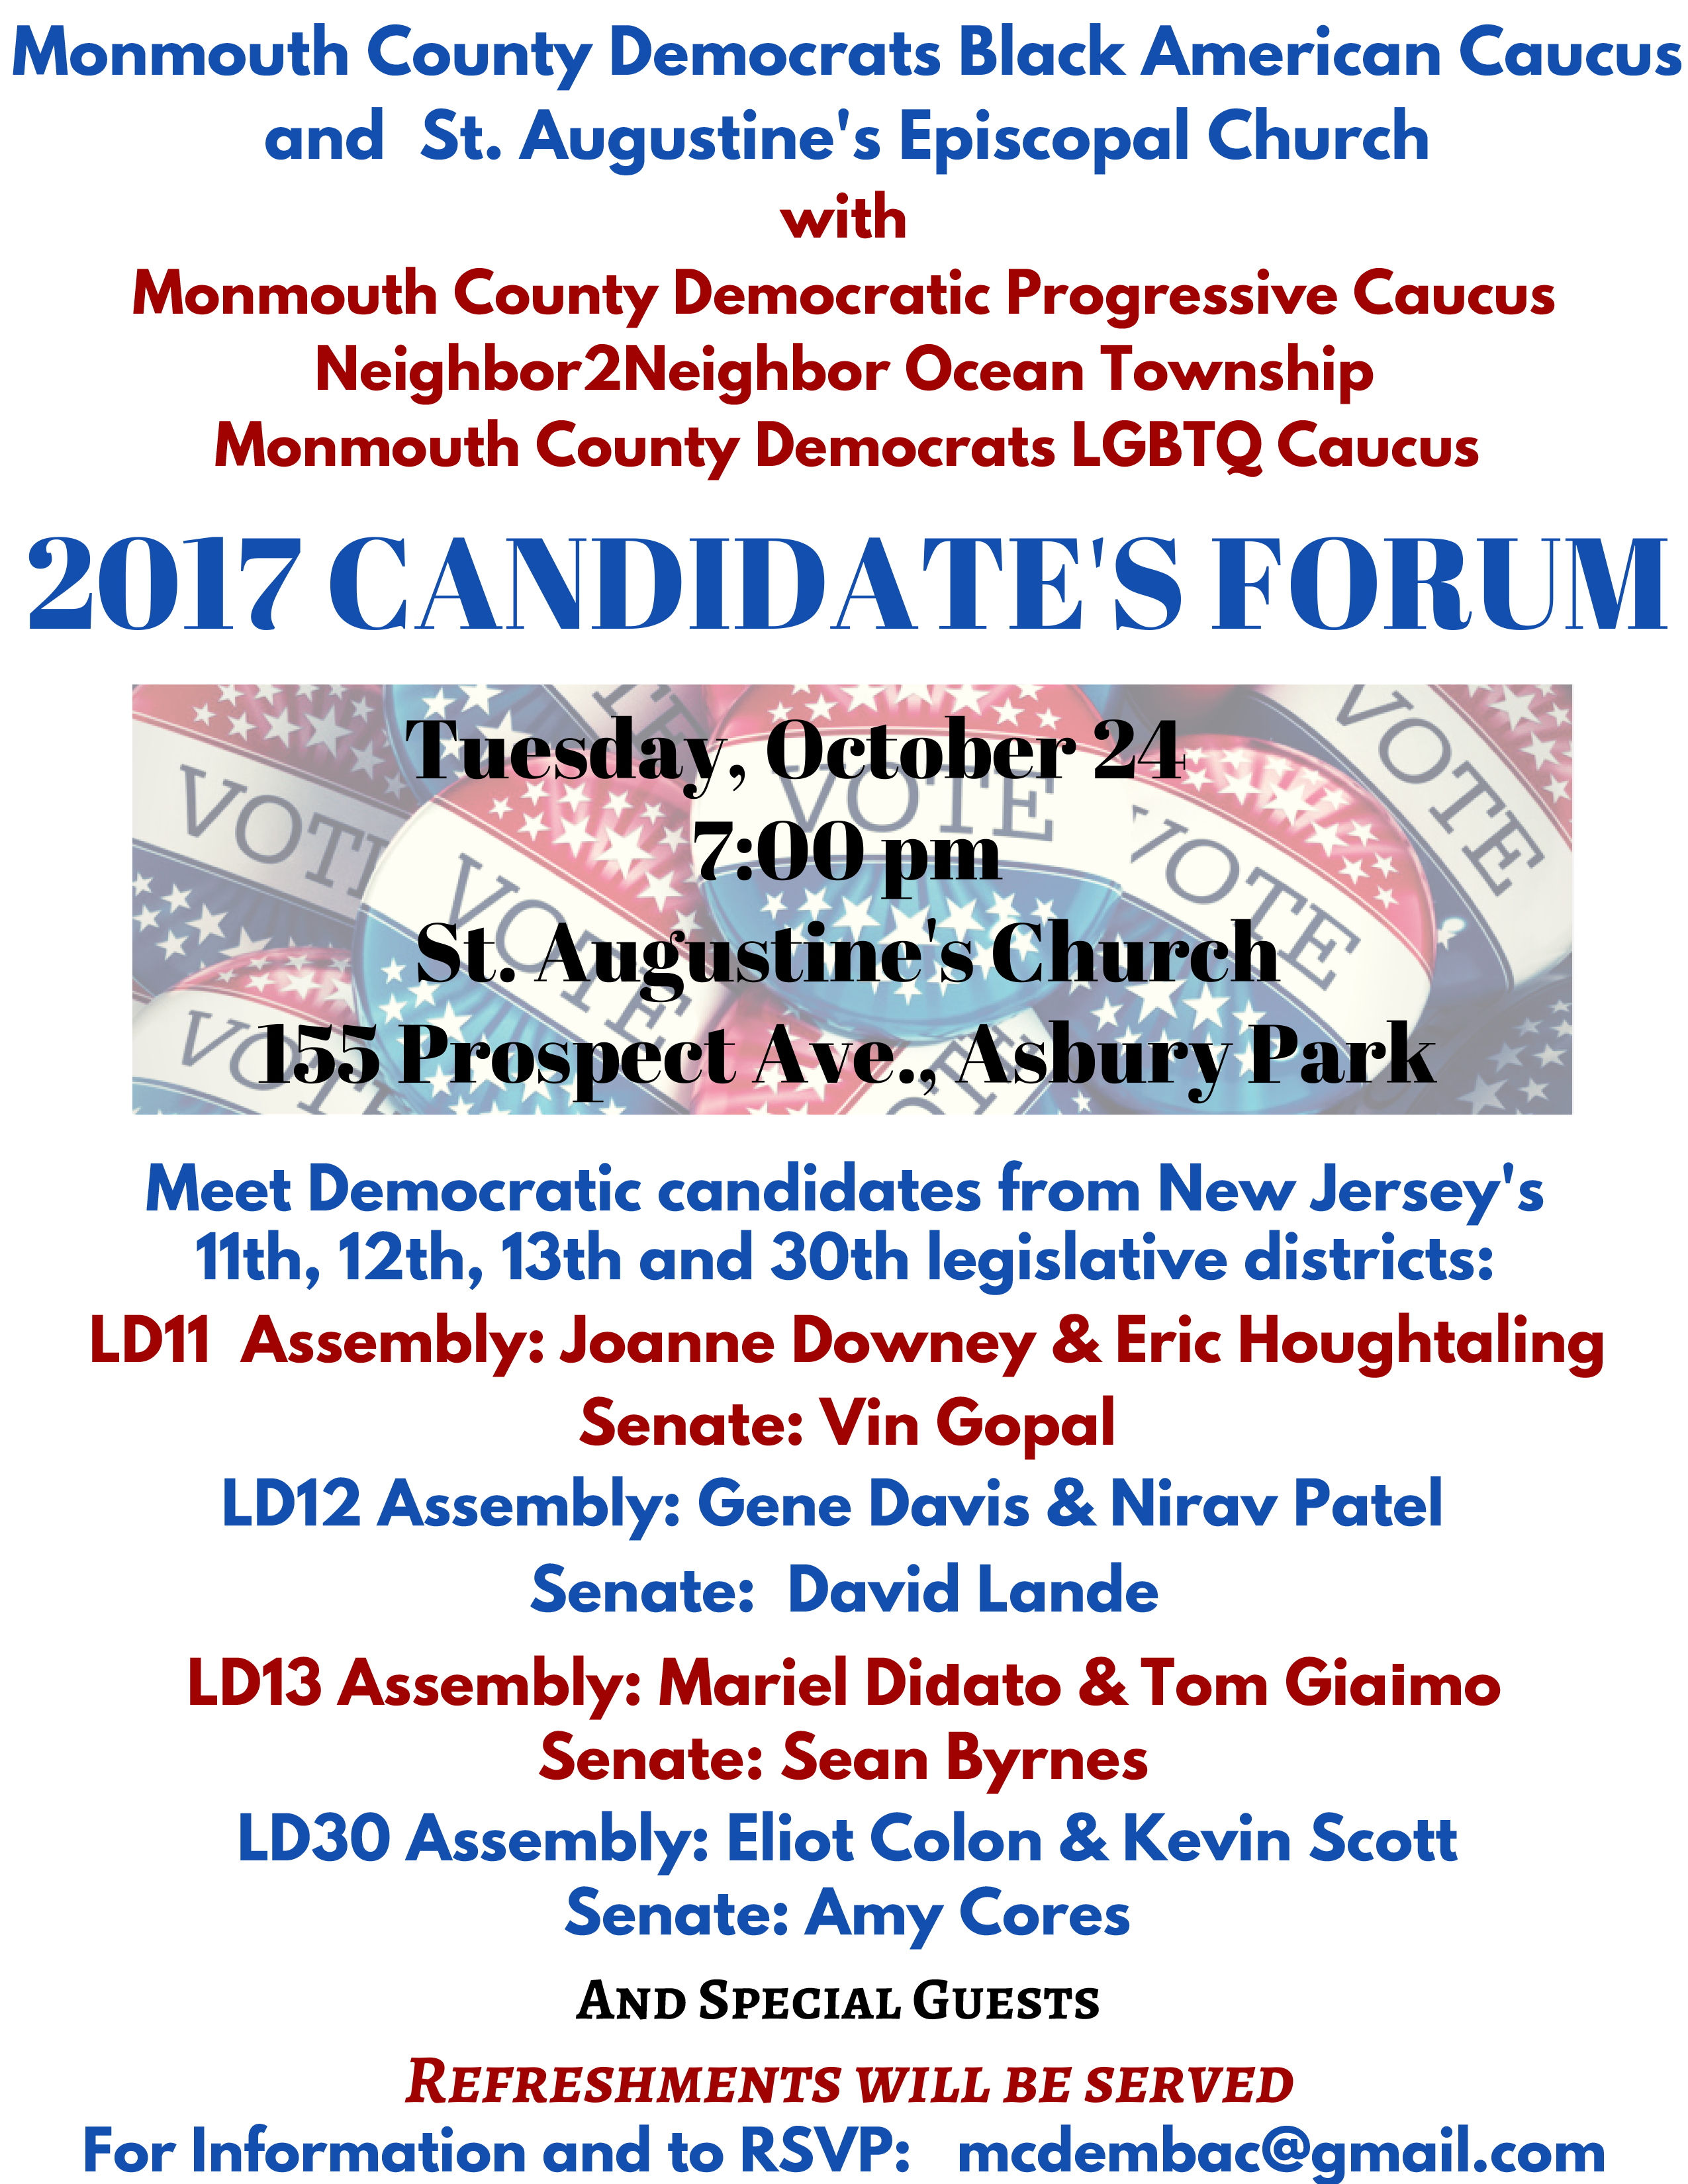 monmouth county democrats black caucus